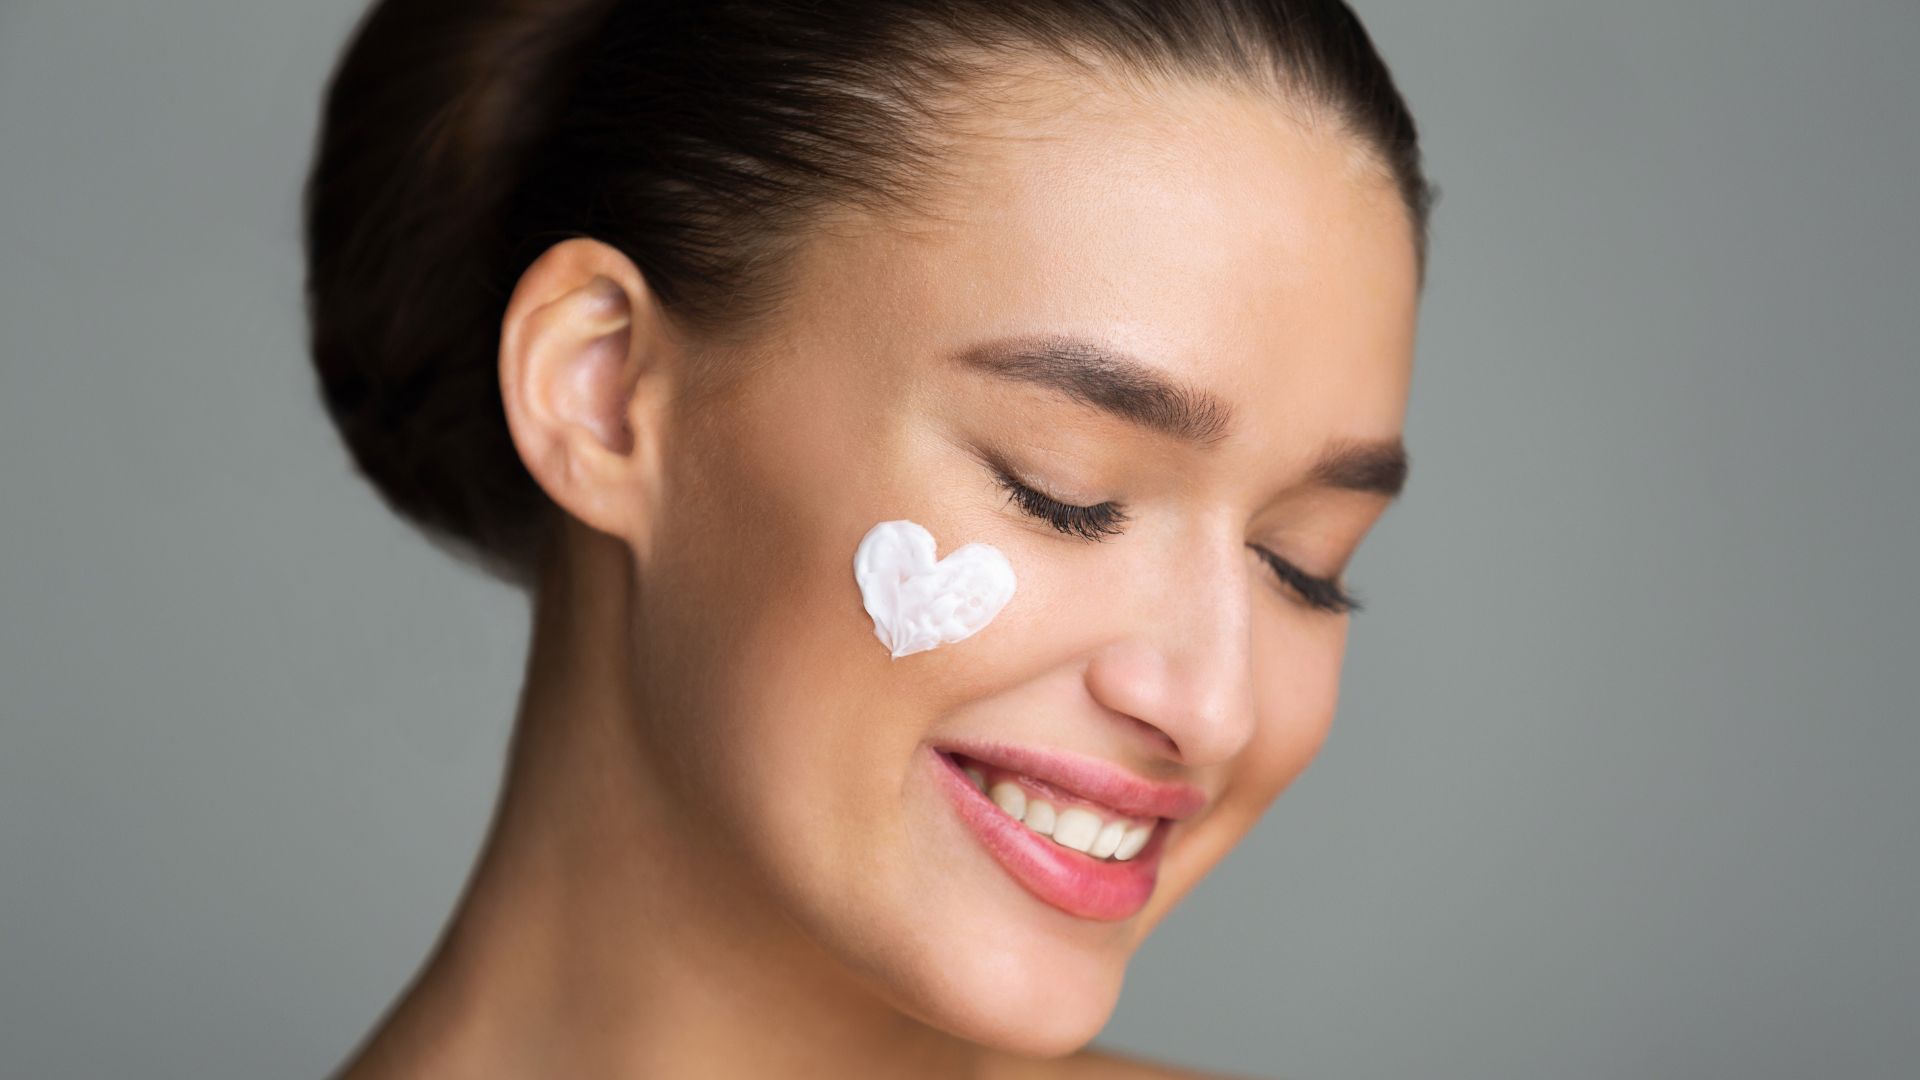 Photo of a heart-shaped cream spot on a woman's face, symbolizing skincare and beauty treatment at Agigma Holistic Spa